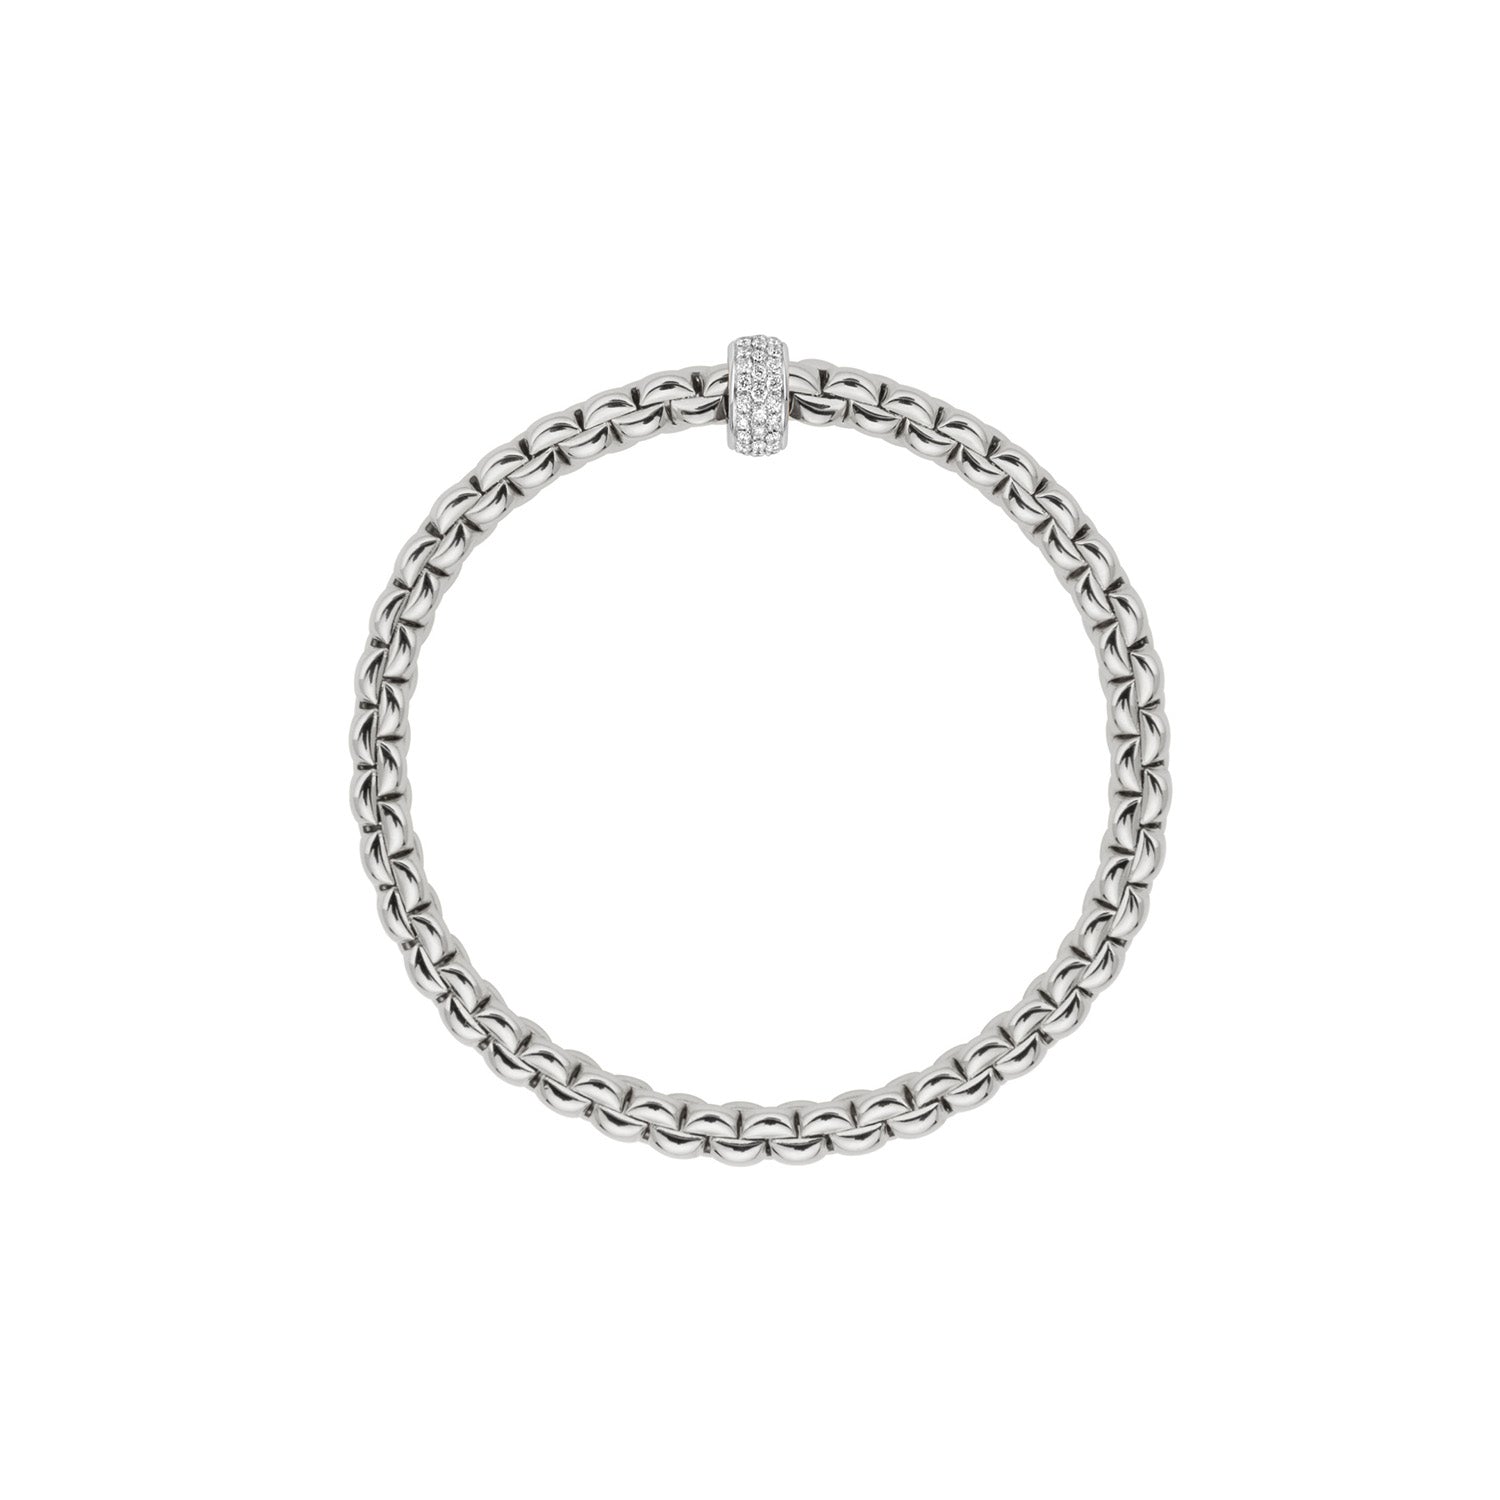 Flex'it Eka bracelet with diamond pave in White Gold